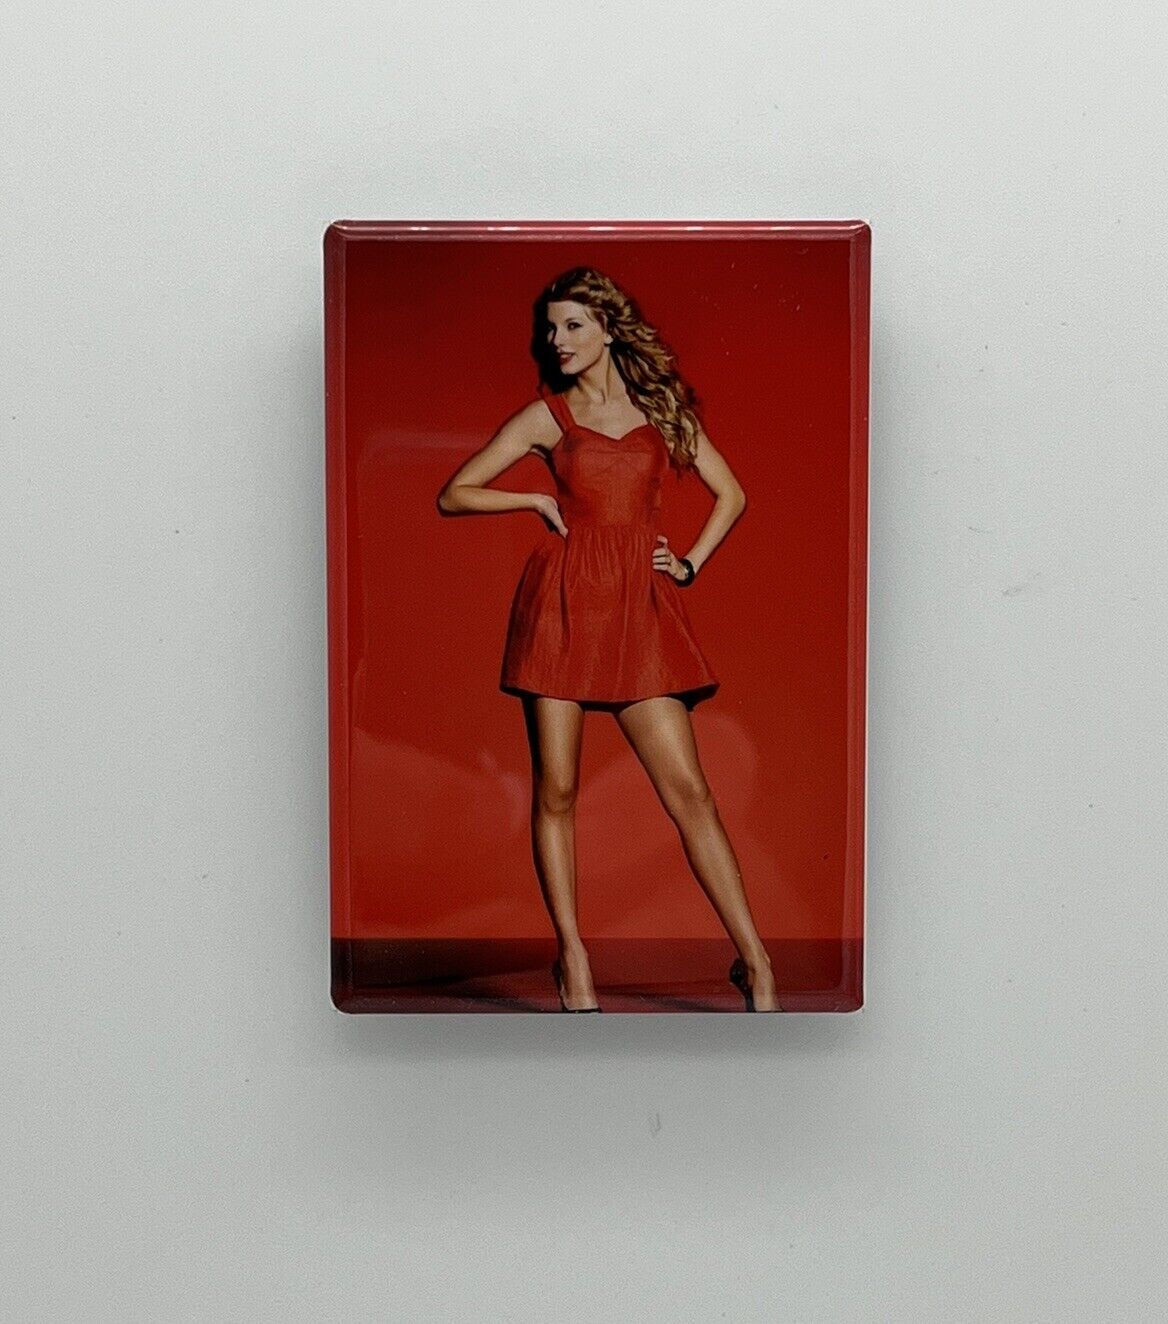 Taylor Swift, Red Dress Photo Souvenir Promotional Fridge / Locker Magnet